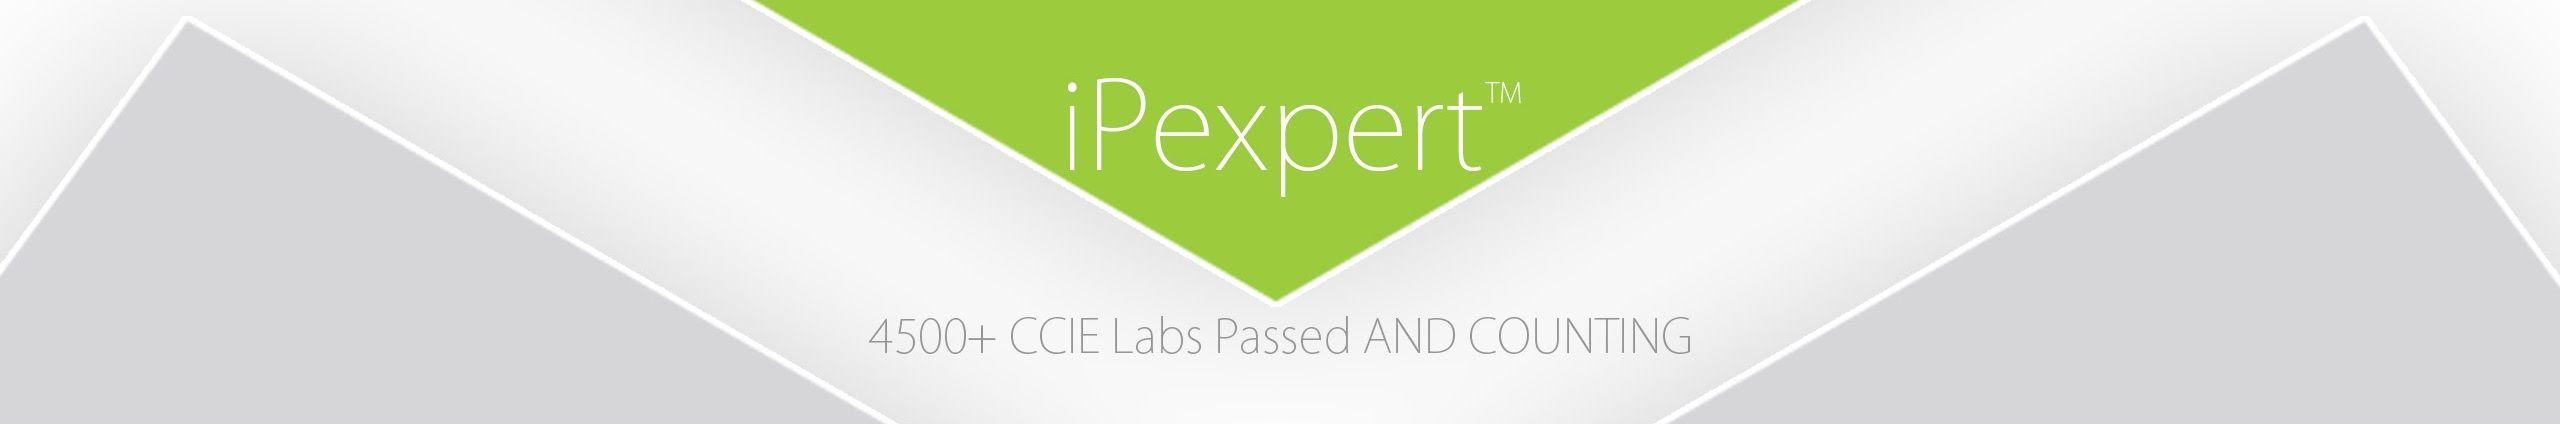 IPexpert Logo - IPexpertInc - YouTube